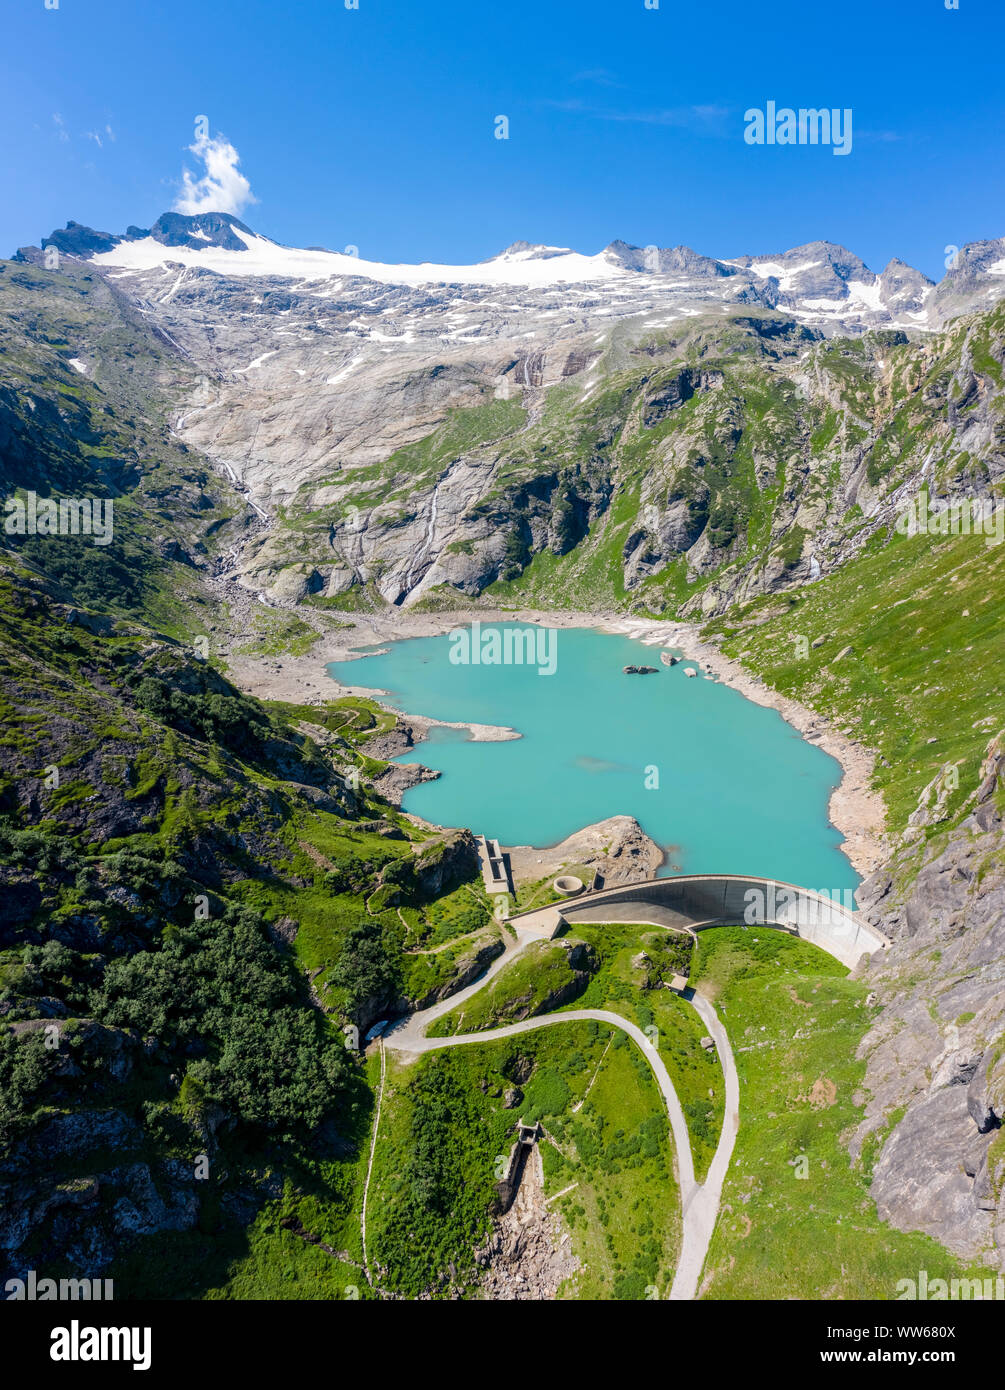 Aerial view of Basodino glacier and Lago del Zott with its dam, Robiei, Bavona valley, Maggia Valley, Lepontine Alps, Canton Ticino, Switzerland. Stock Photo